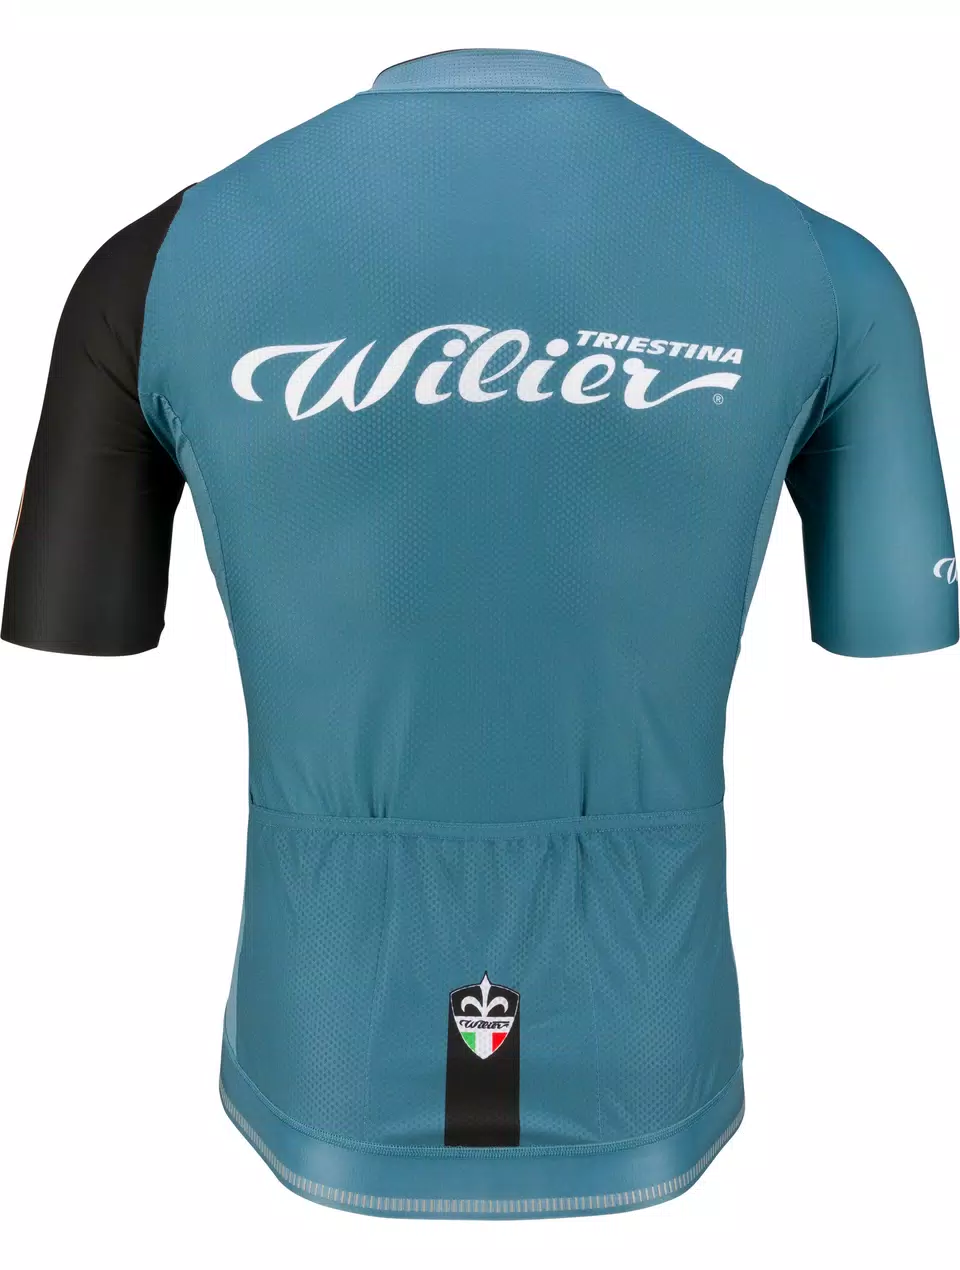 Trikot Mann Wilier Cycling Club blau